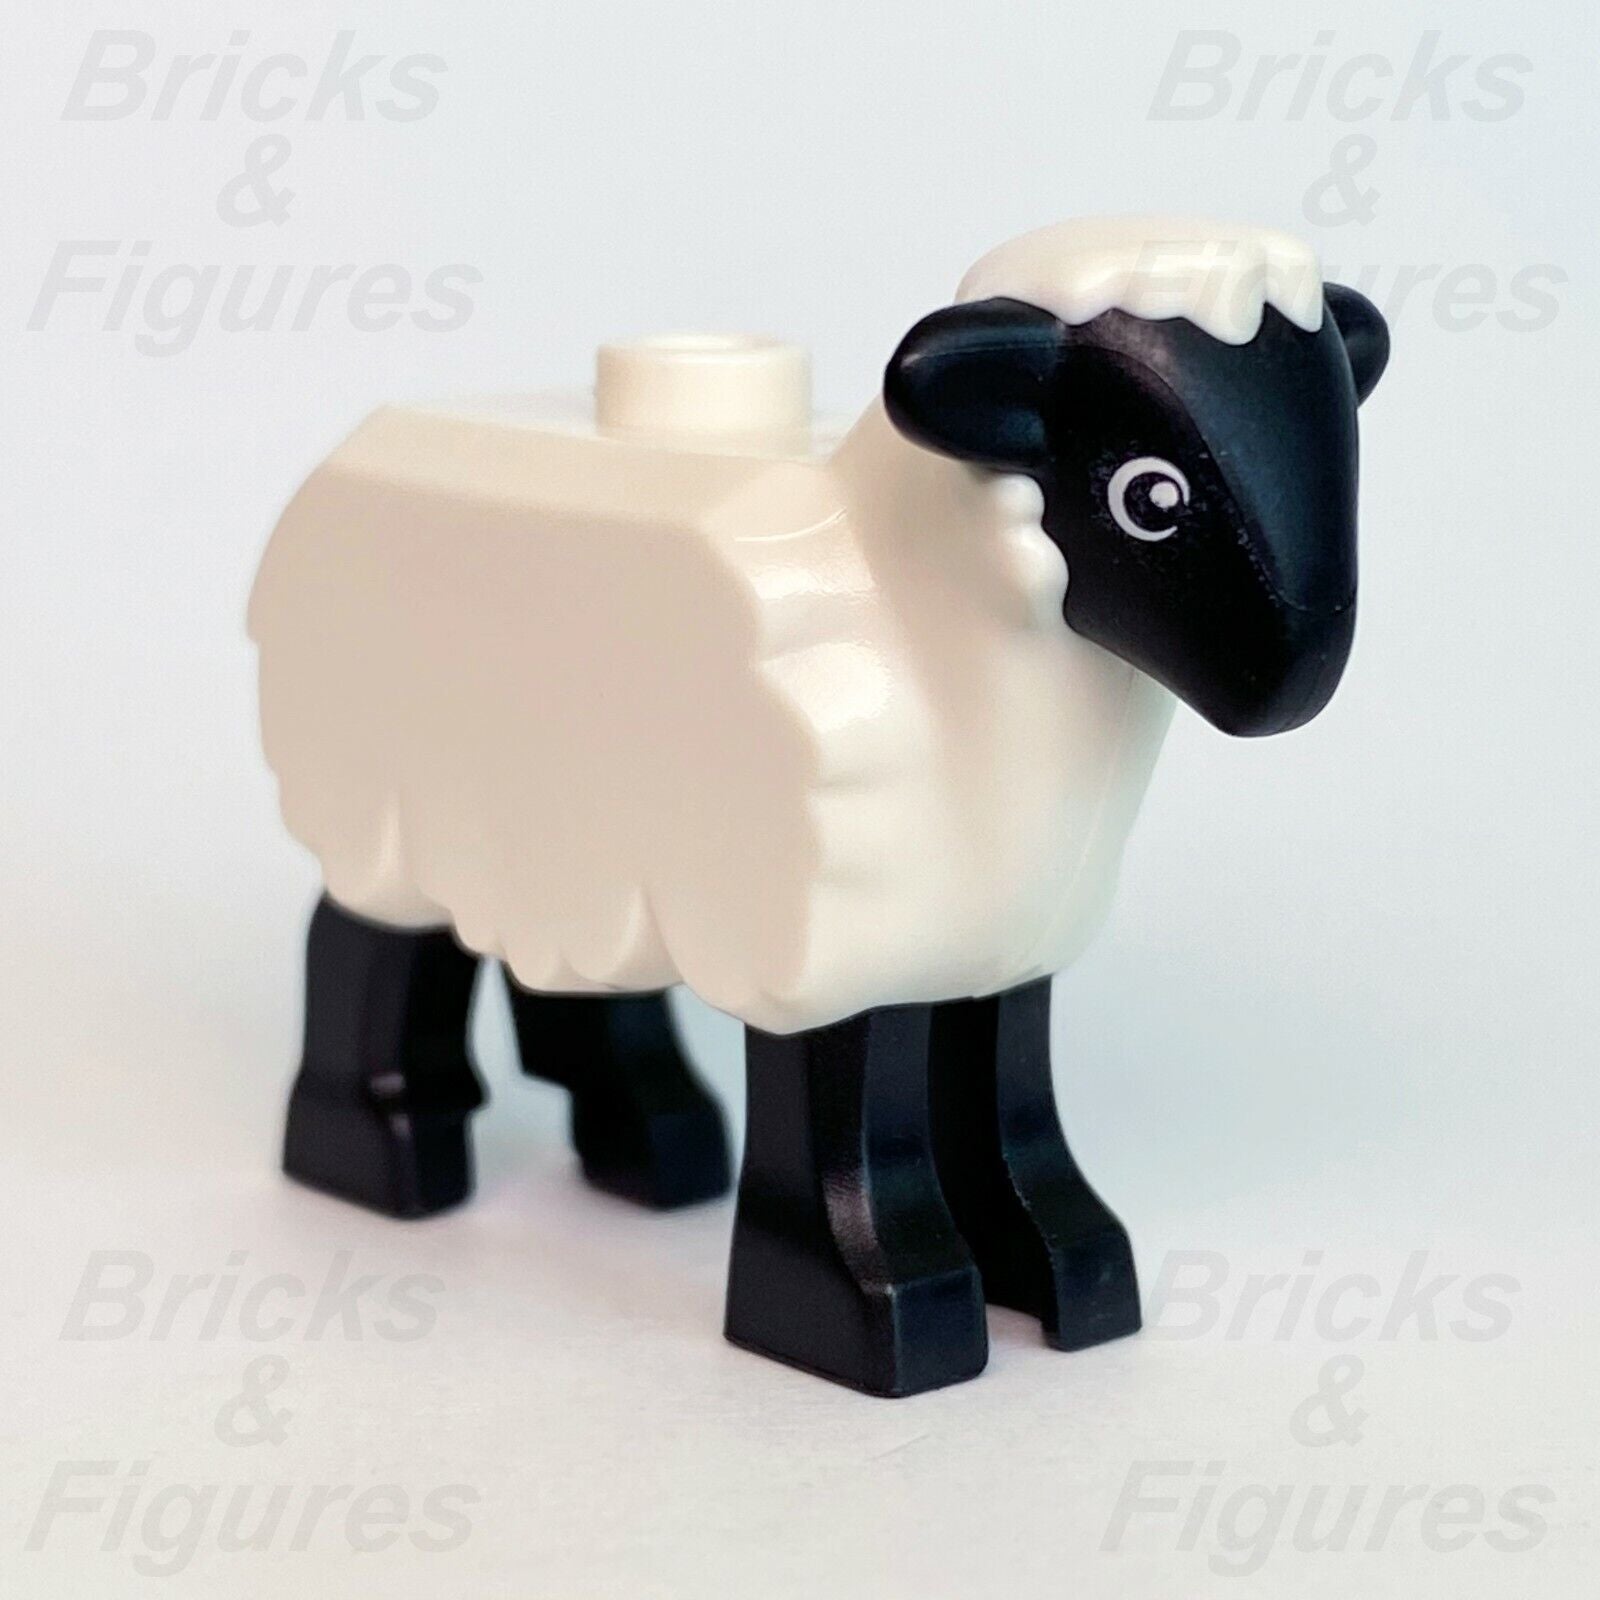 LEGO Sheep Black Head & Legs Disney's Mickey Mouse Animal Minifigure Part 10775 - Bricks & Figures